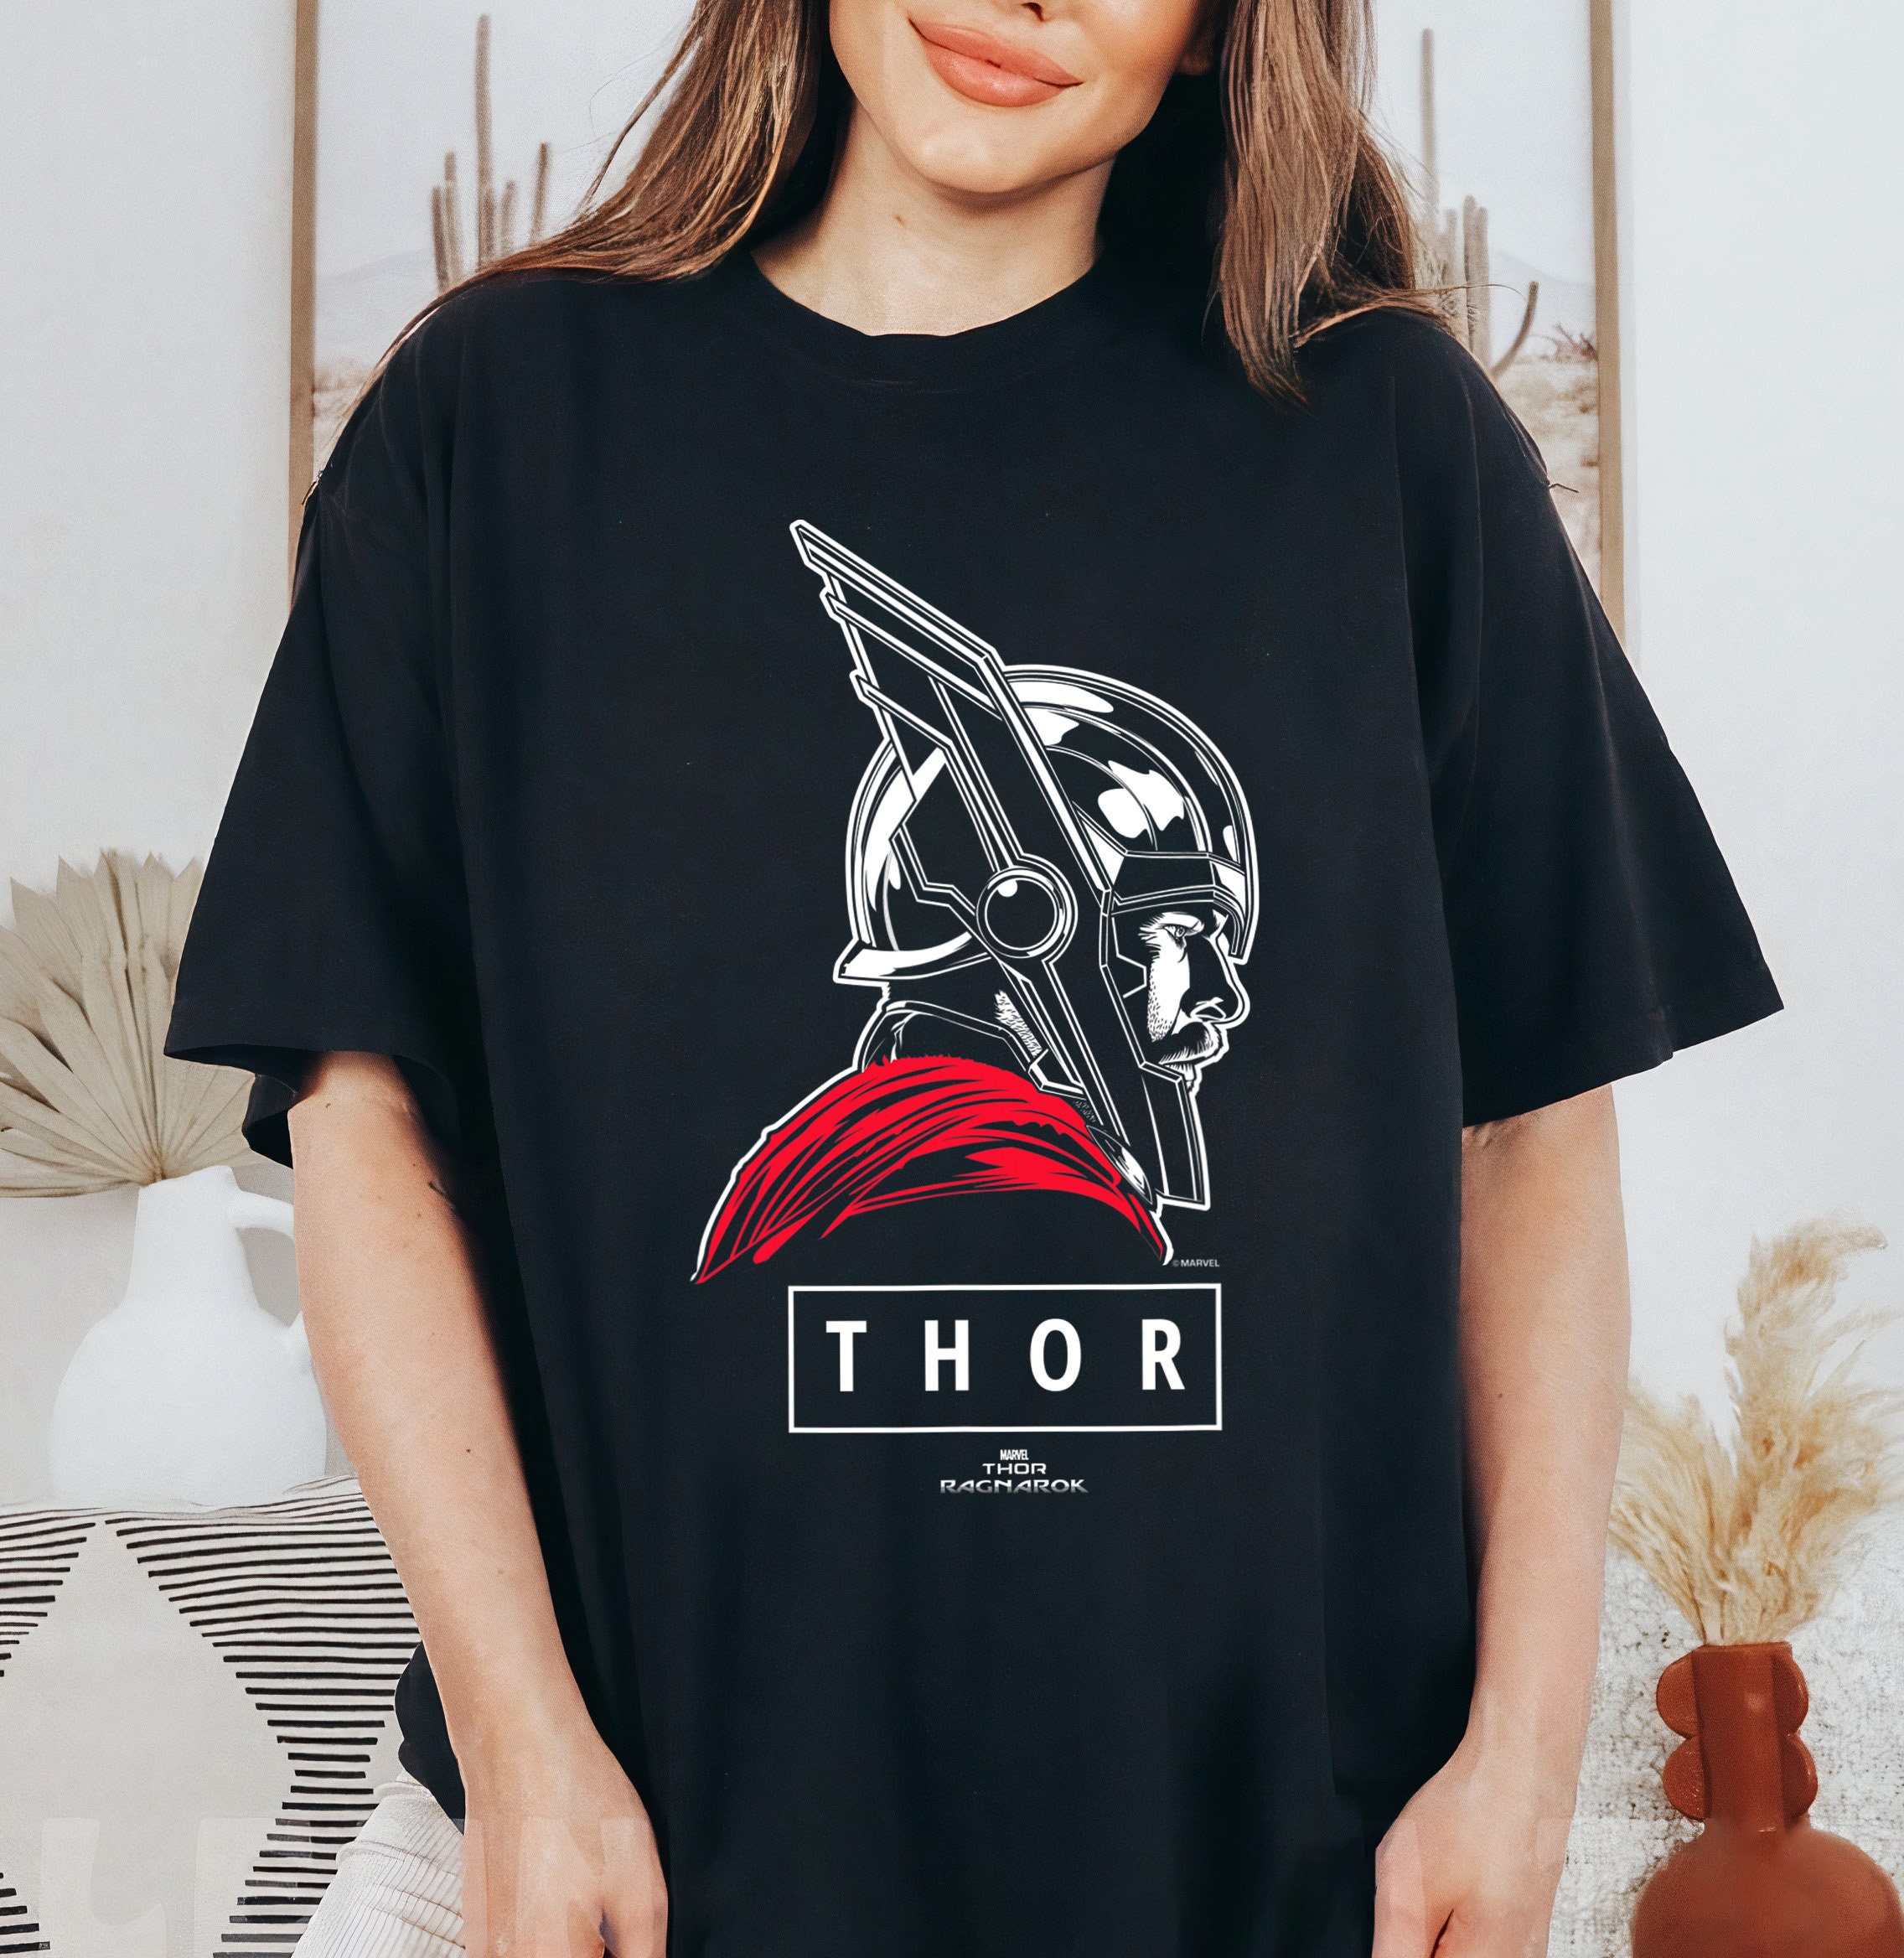 Shuumatsu no Valkyrie: Record of Ragnarok Thor Essential T-Shirt for Sale  by flyrocket